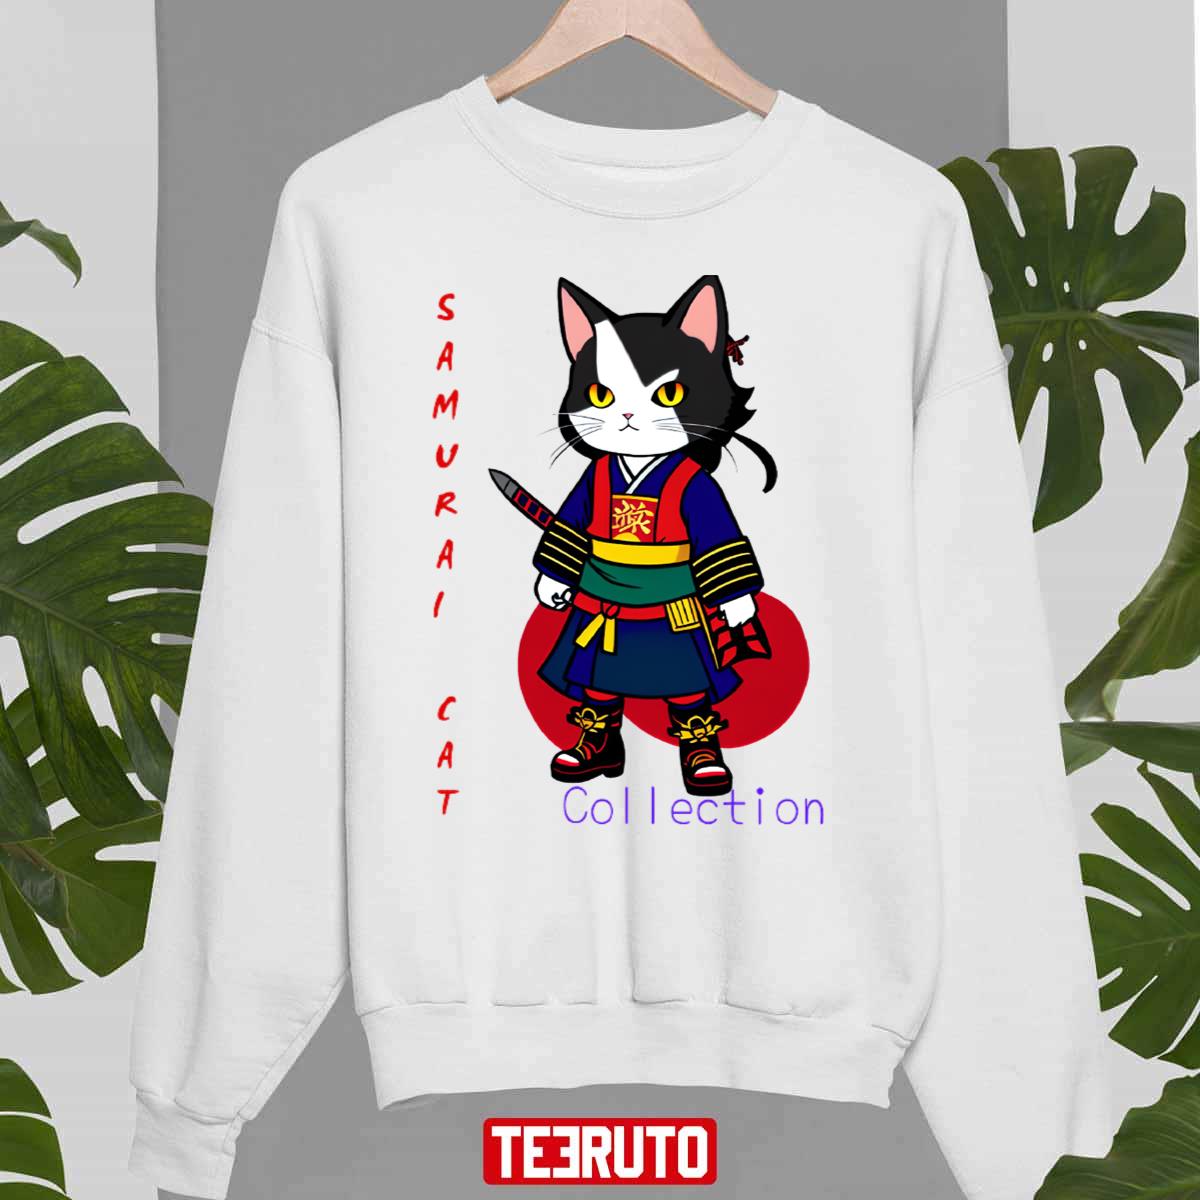 Samurai Cats Collection Unisex T-Shirt